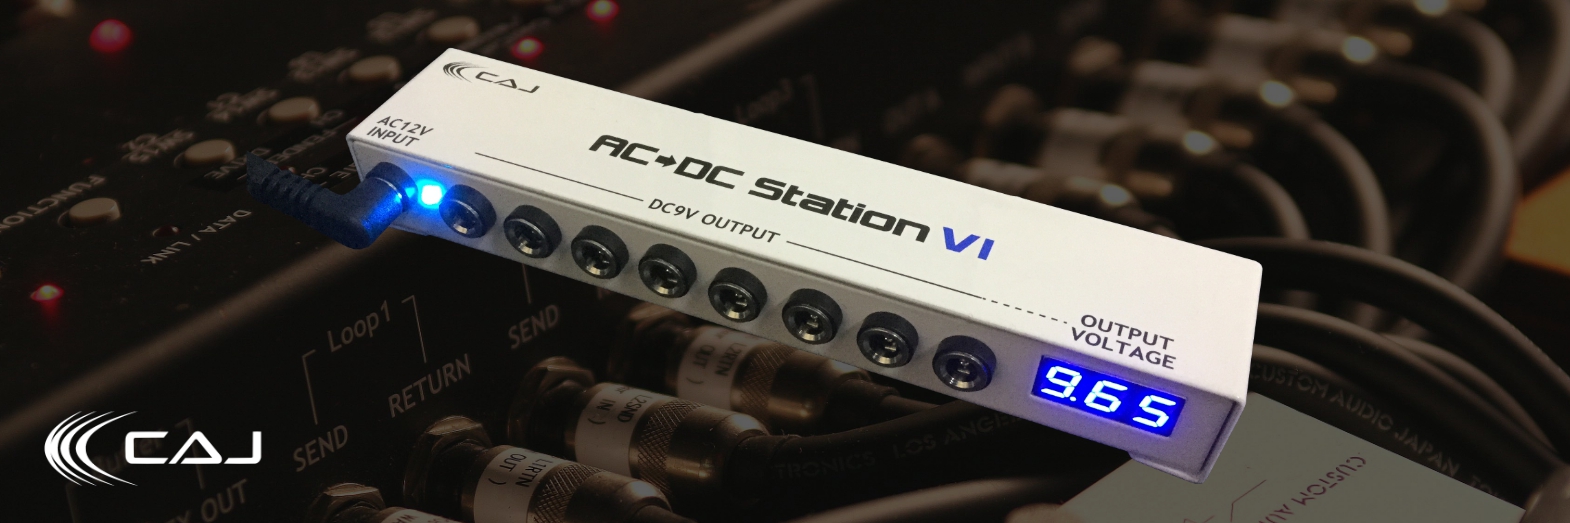 CAJ – AC/DC Station VI